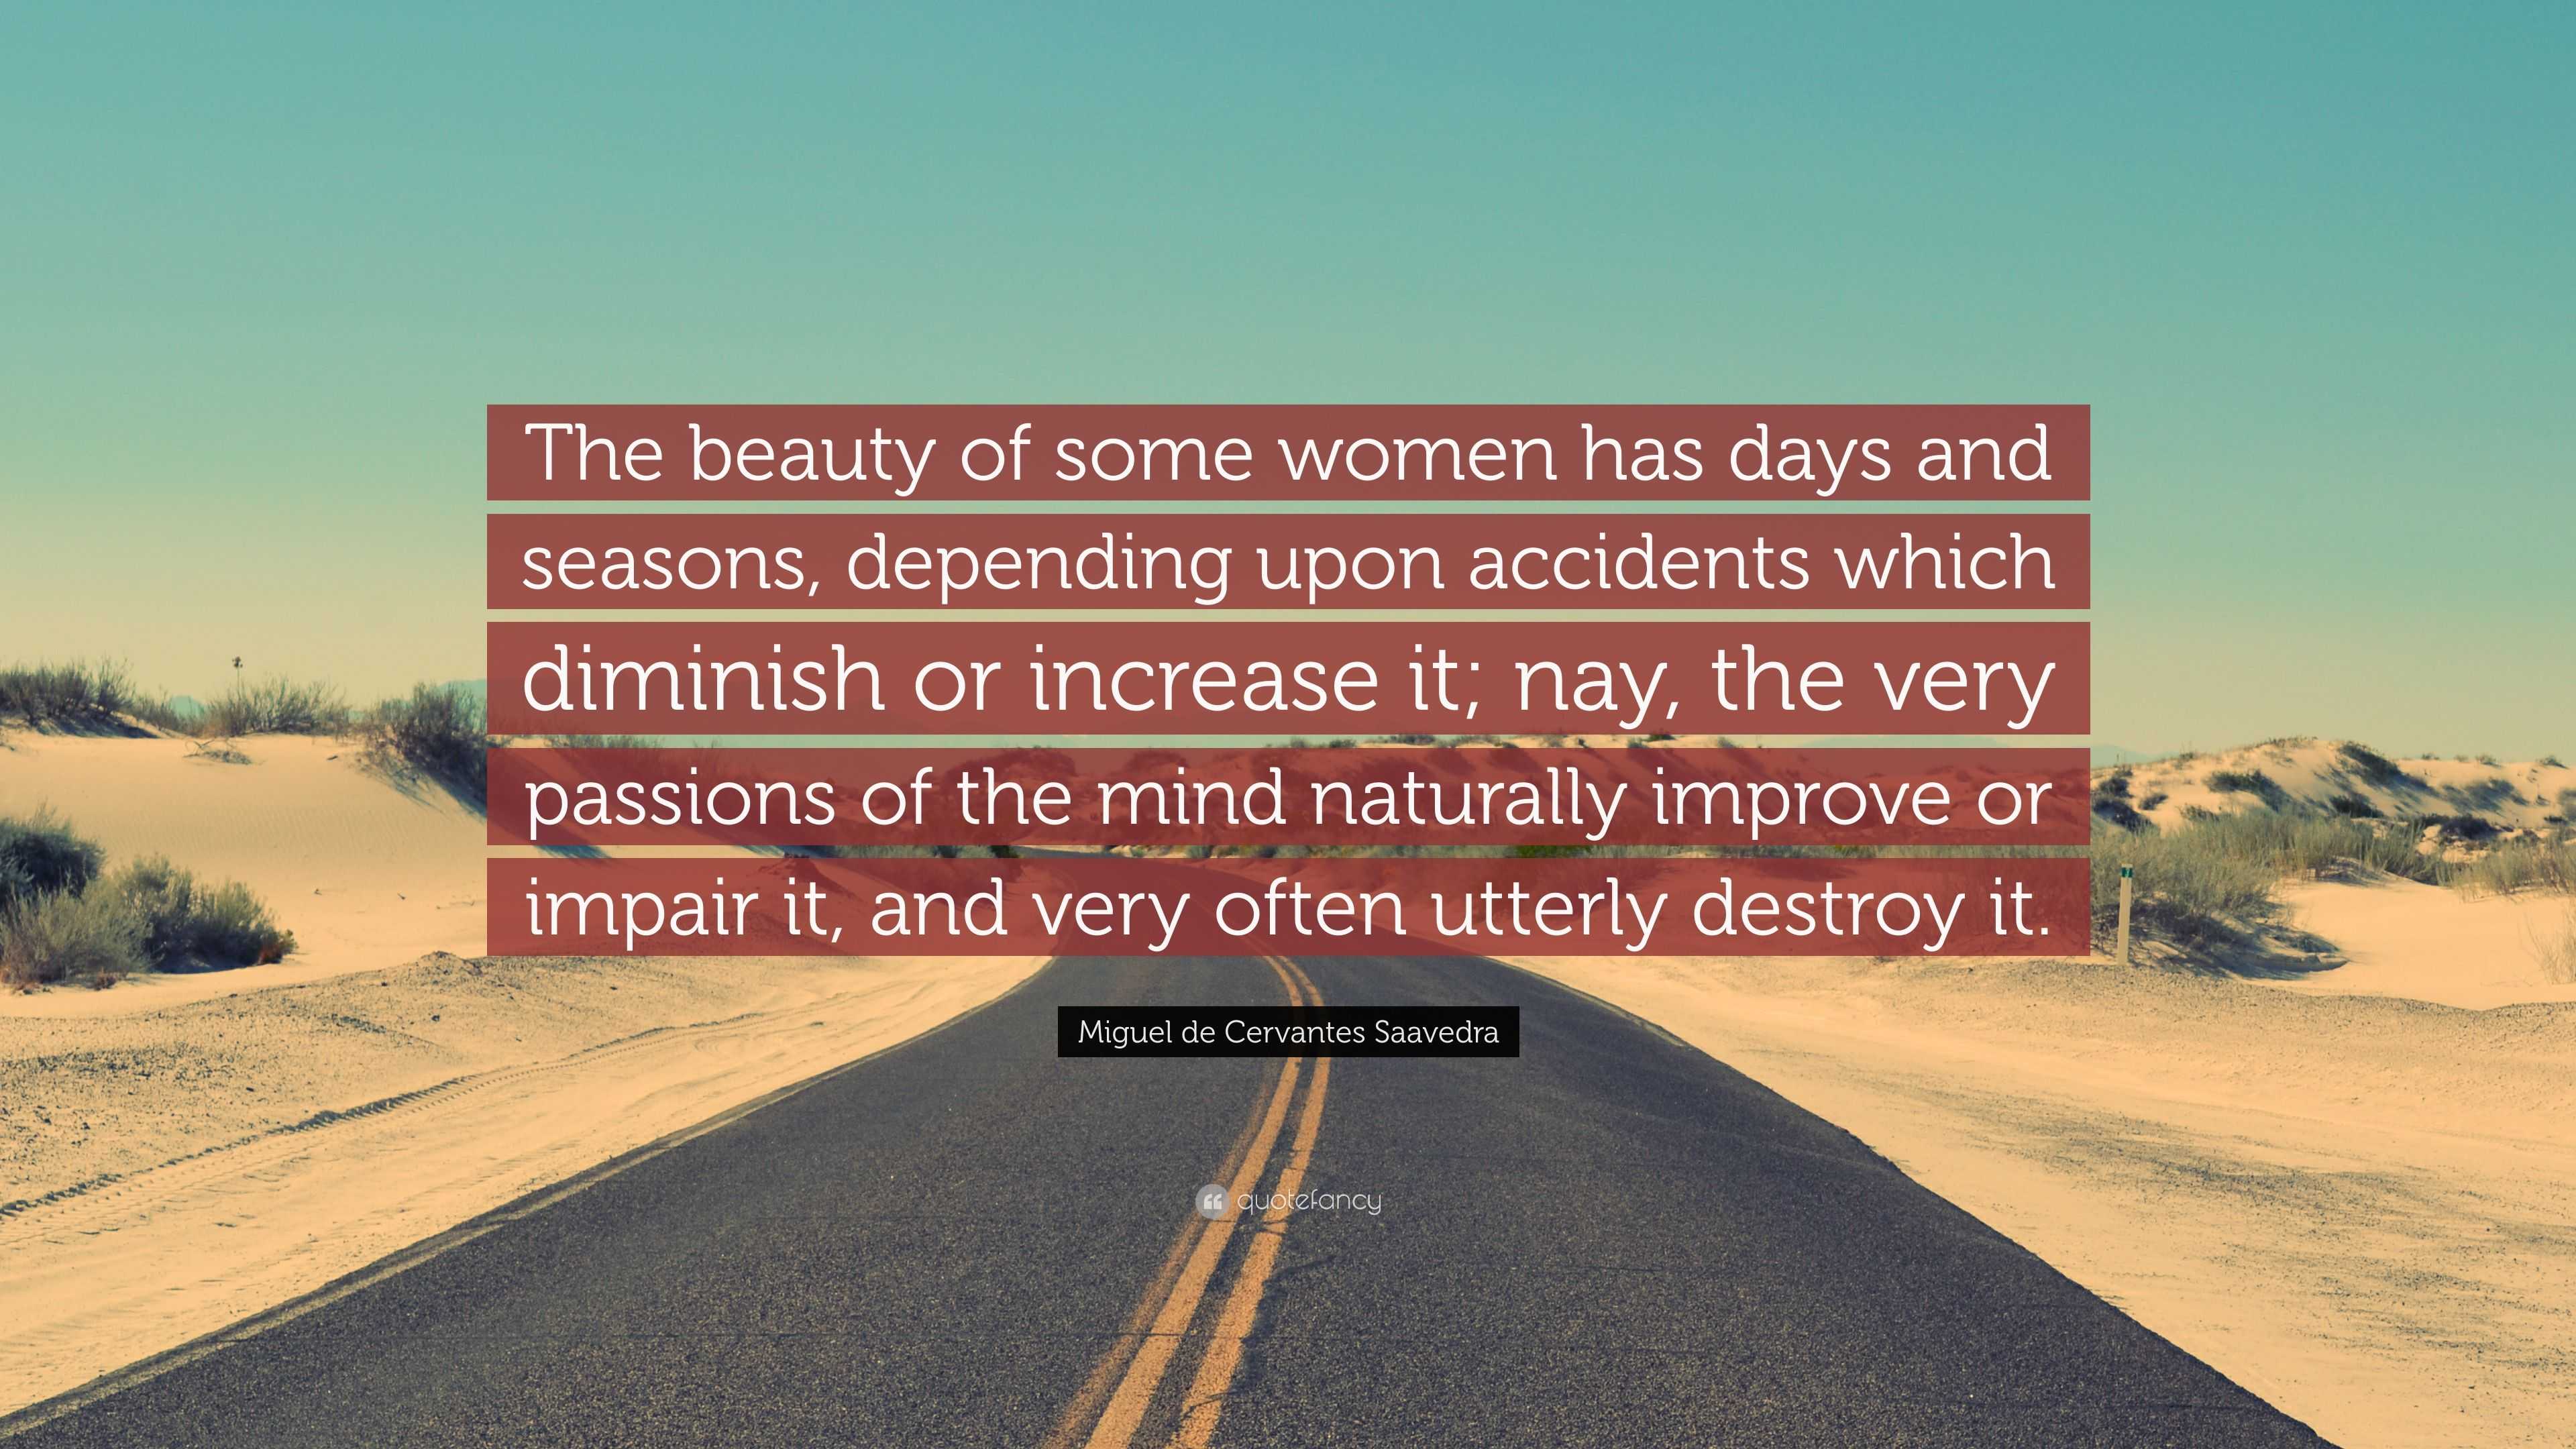 Miguel de Cervantes Saavedra Quote: “The beauty of some women has days ...